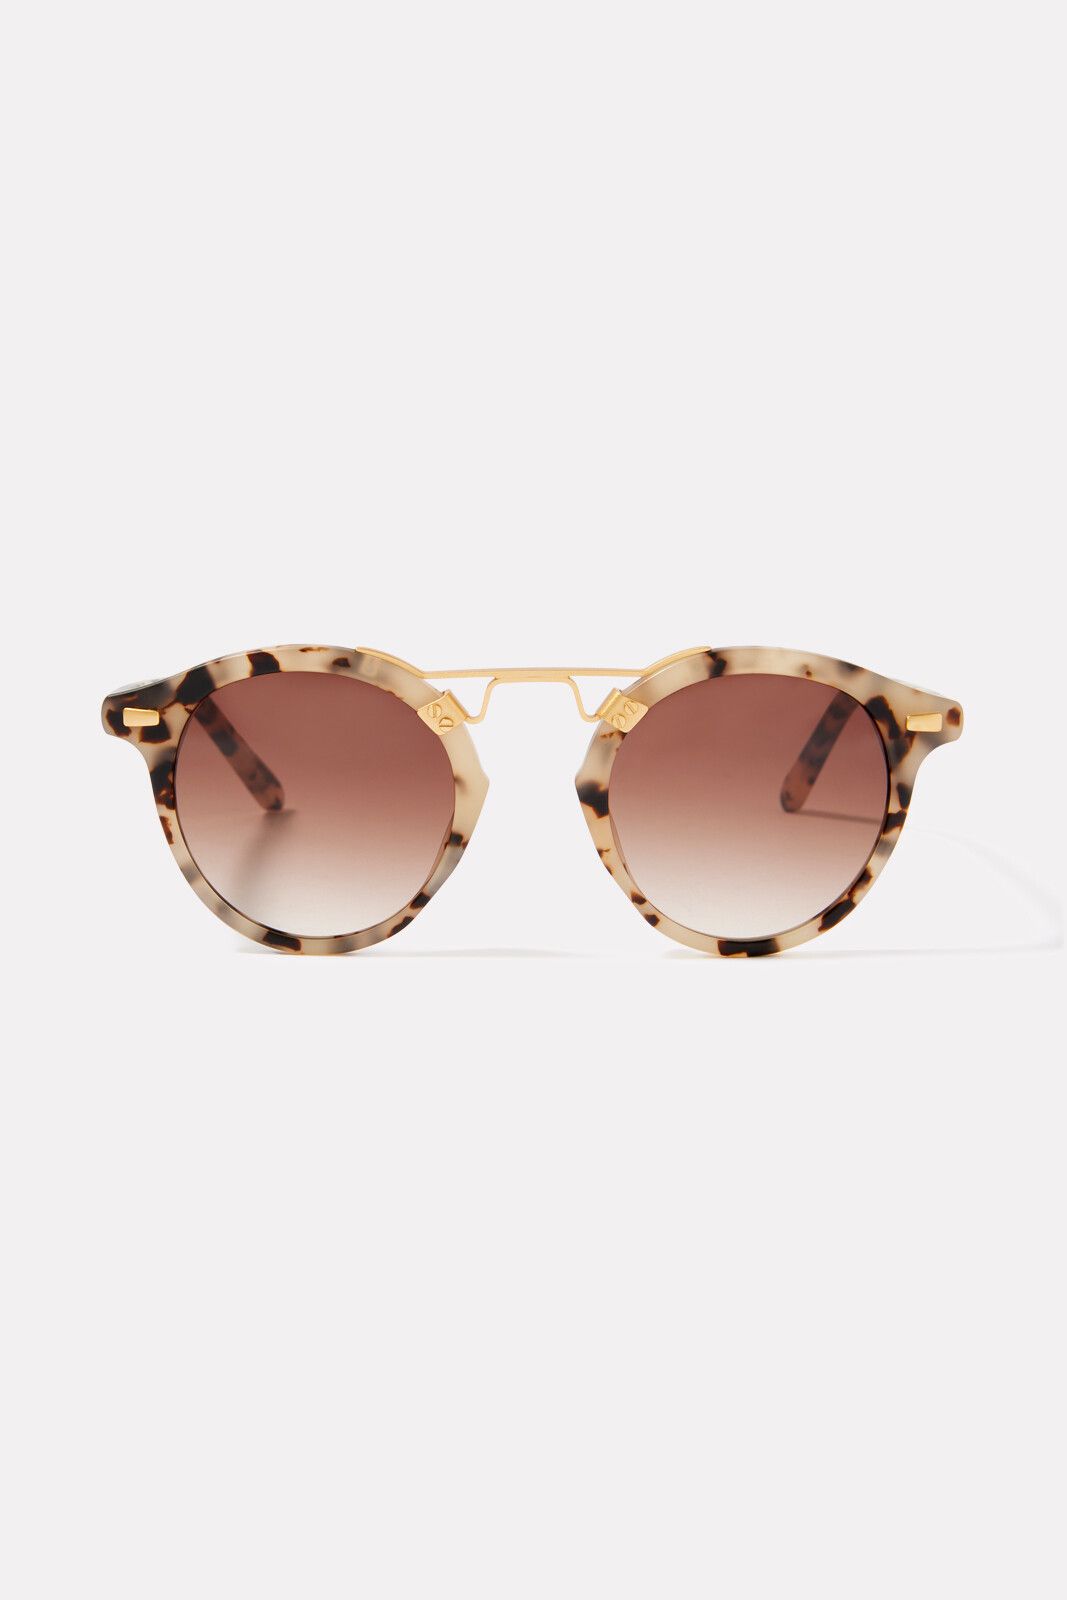 KREWE St. Louis Sunglasses | EVEREVE | Evereve